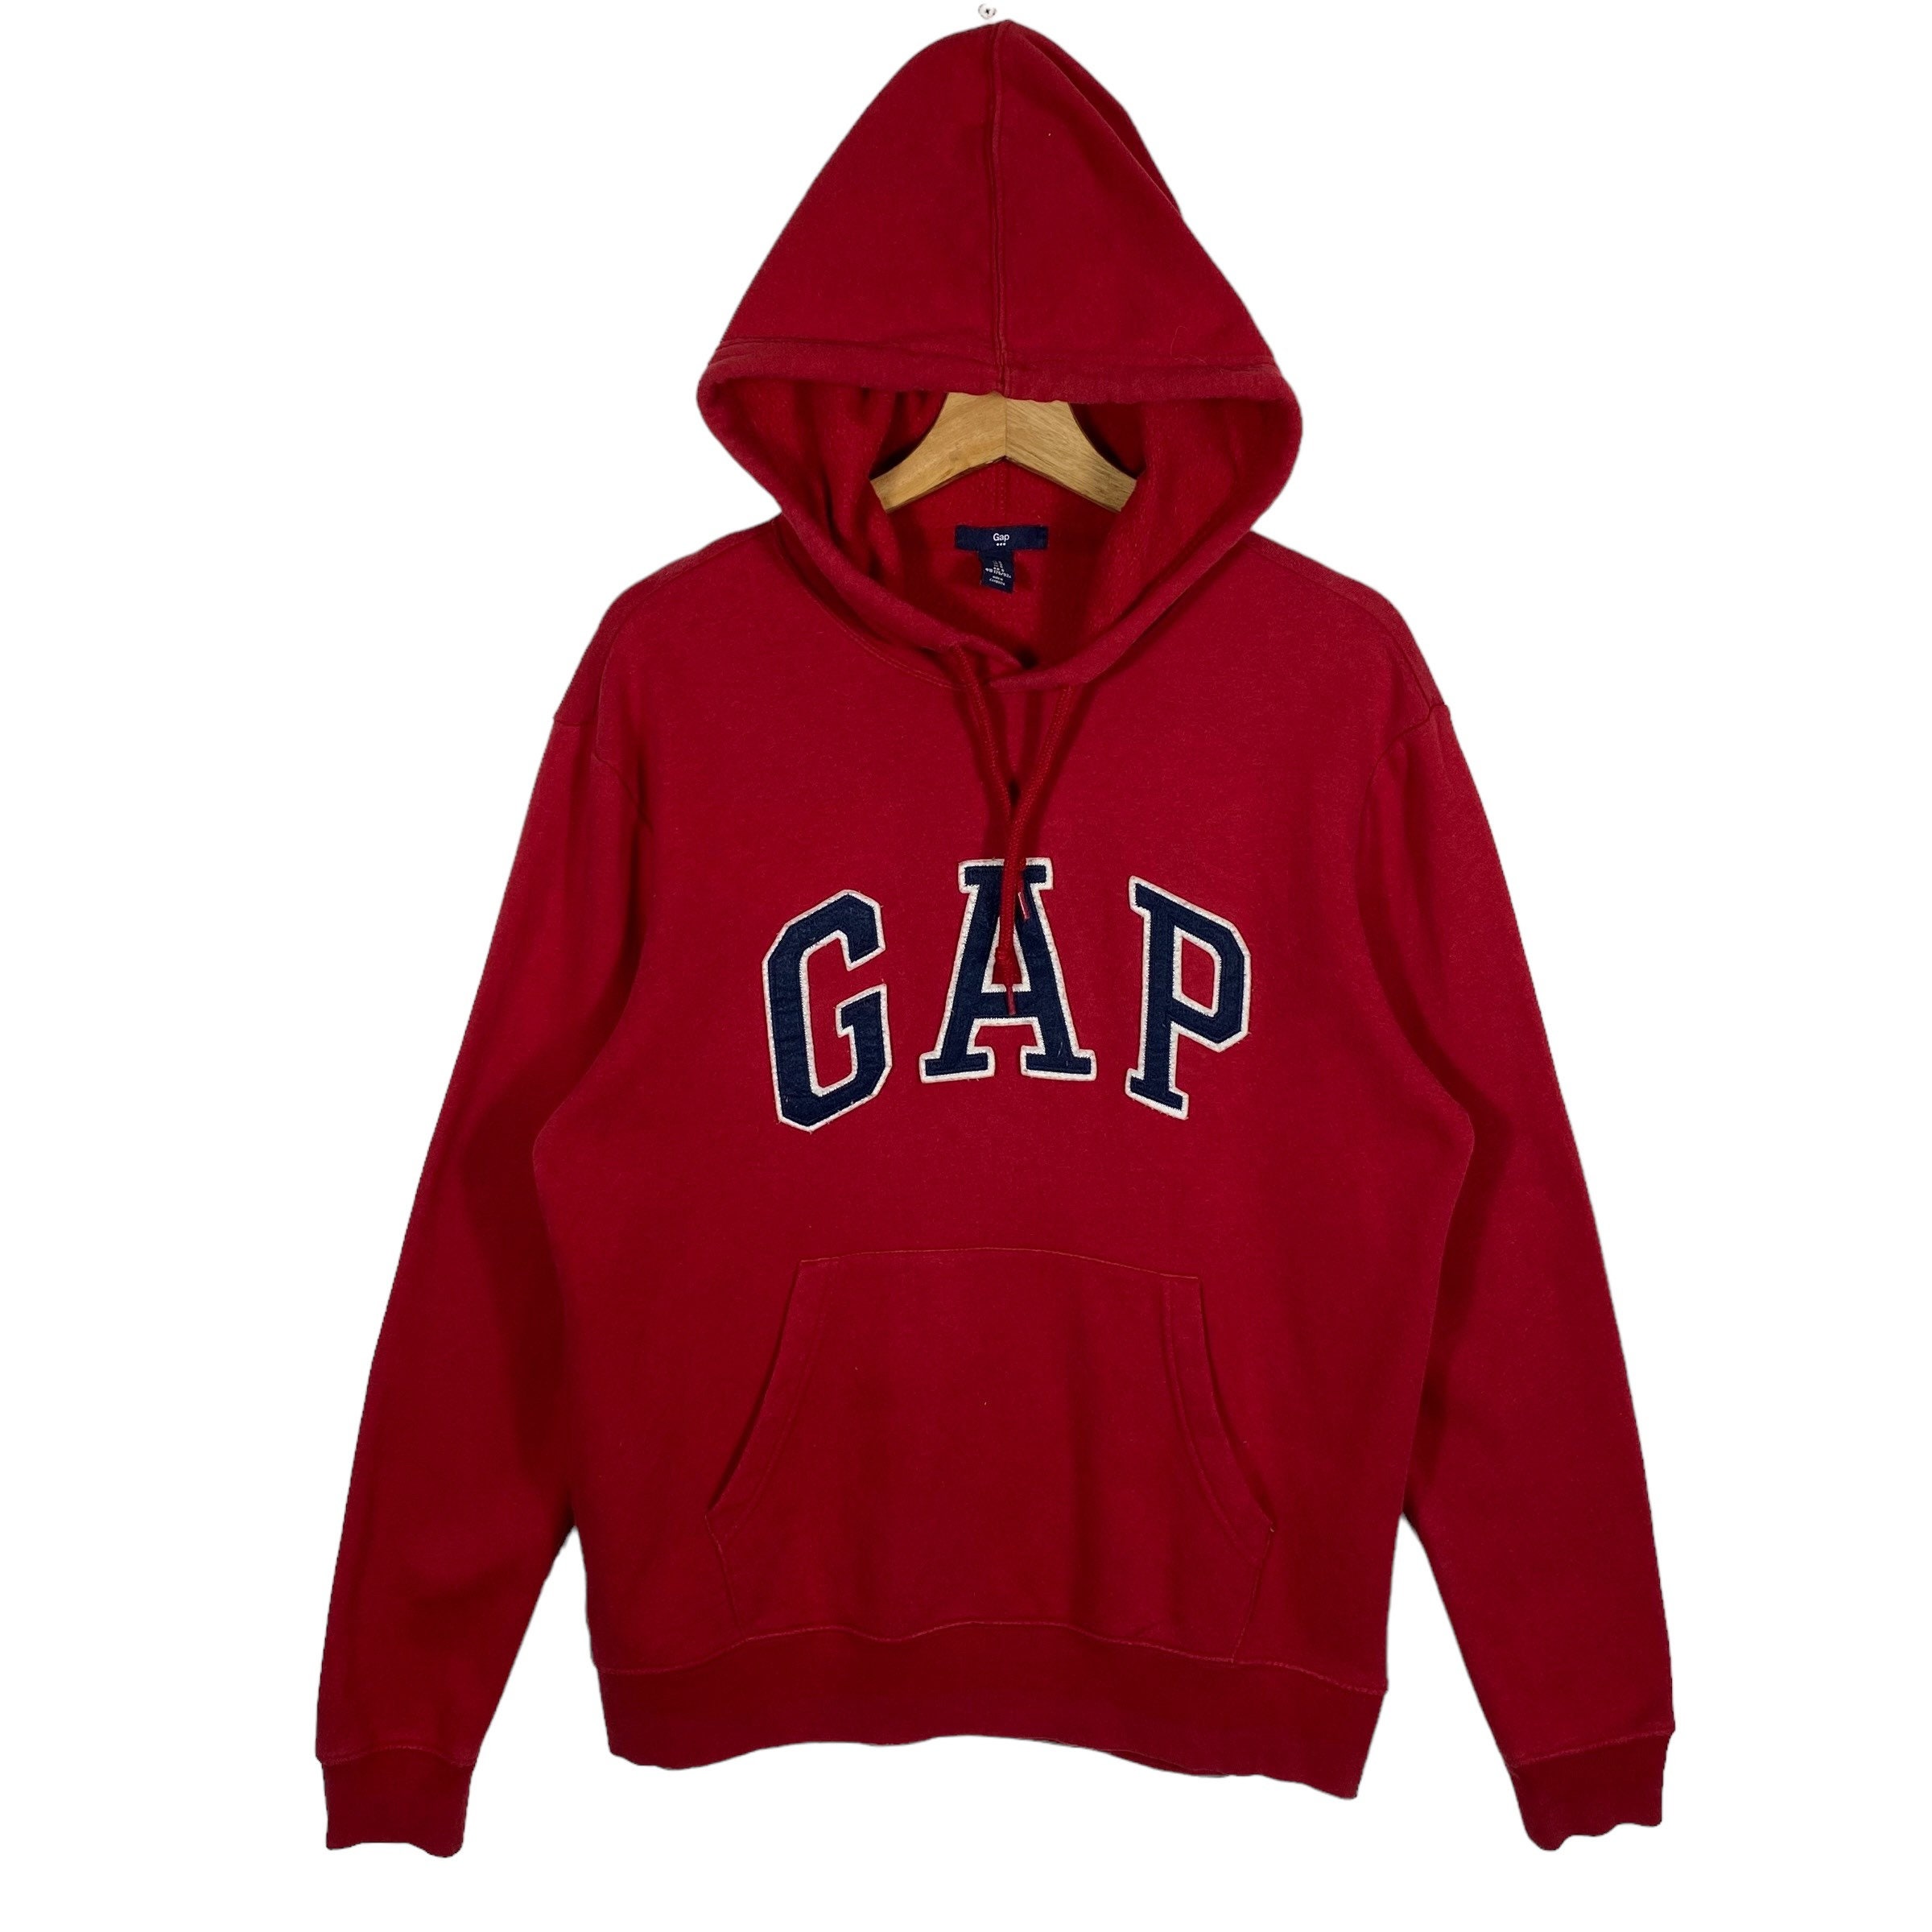 Vintage Gap Hoodie Sweatshirt S Size Red Colour Etsy